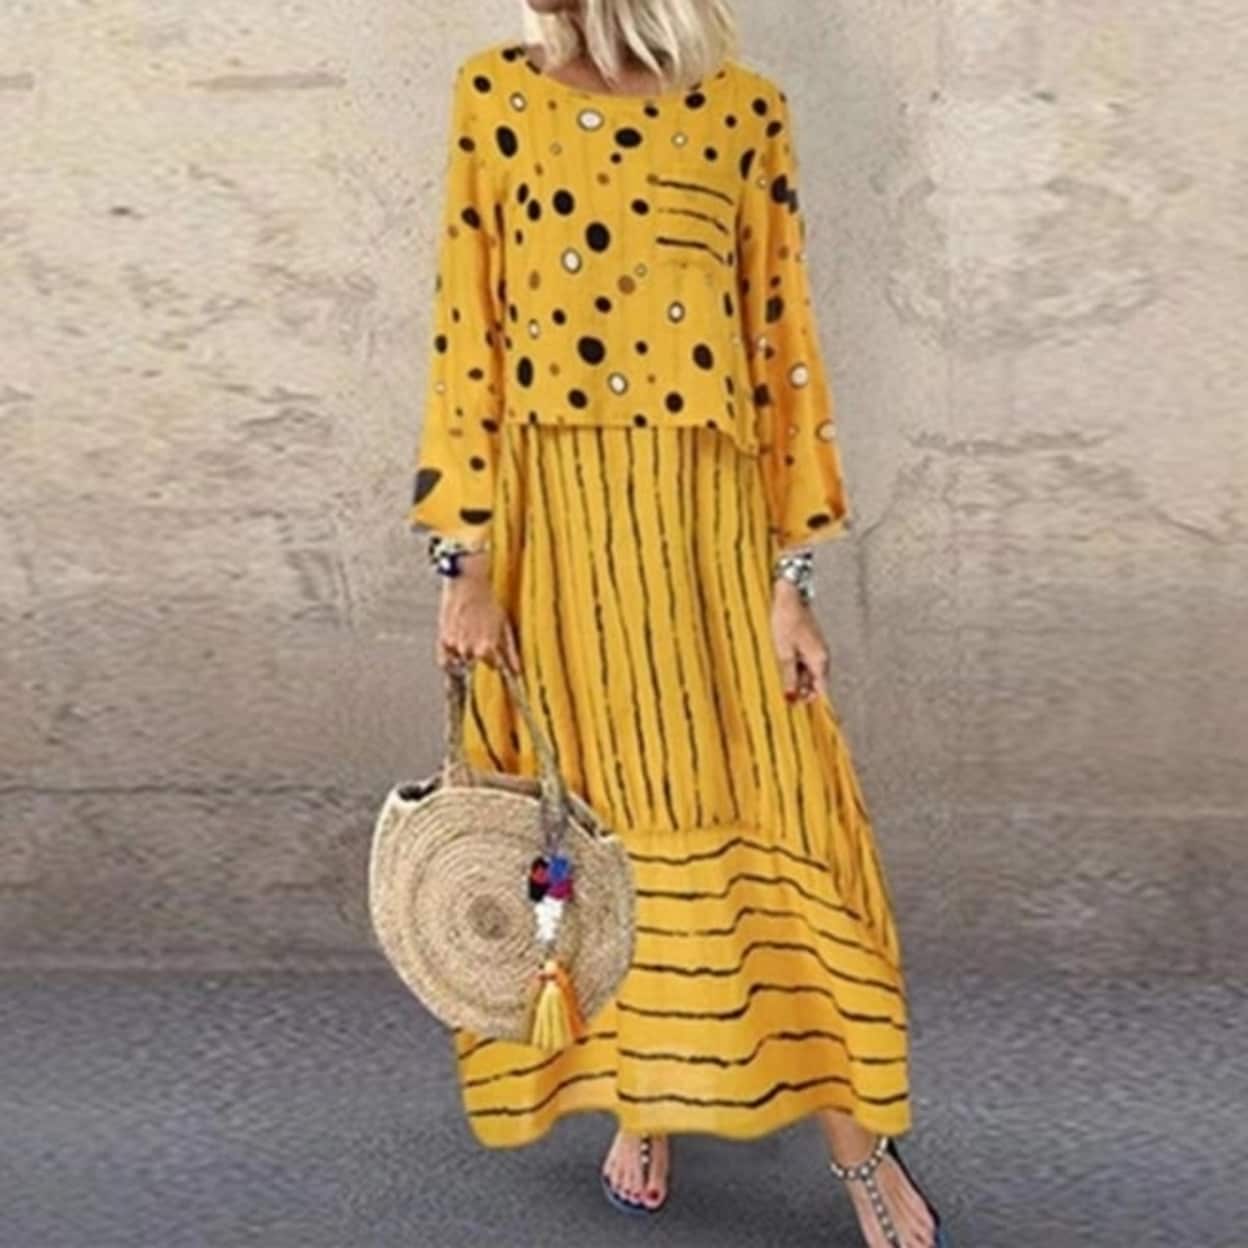 yellow bohemian maxi dress